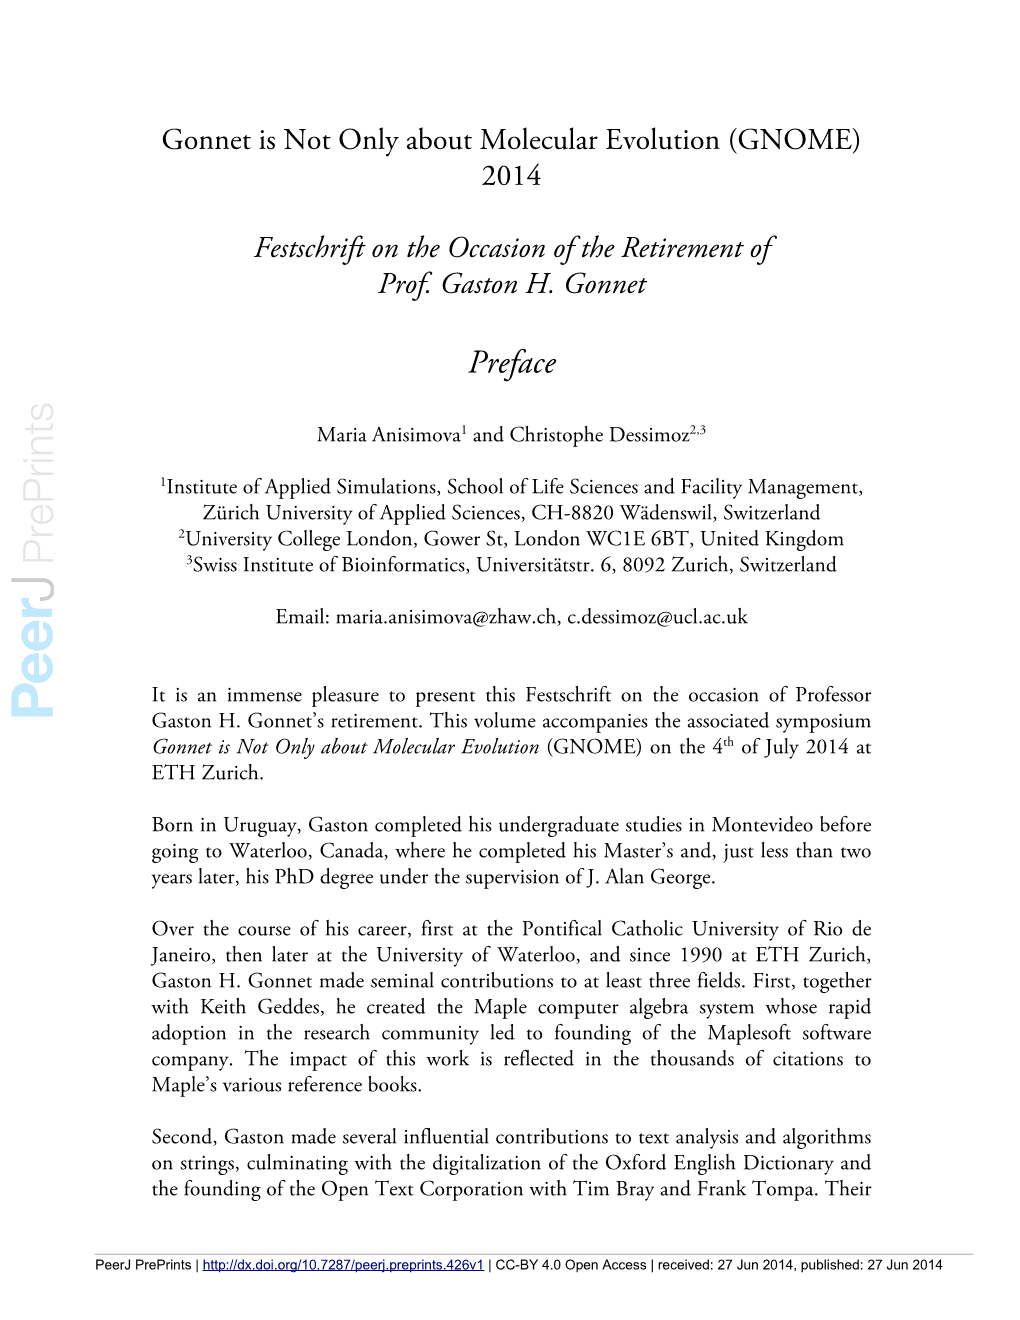 Preface of Proceedings of GNOME 2014 ￢ﾀﾔ Festschrift for Gaston